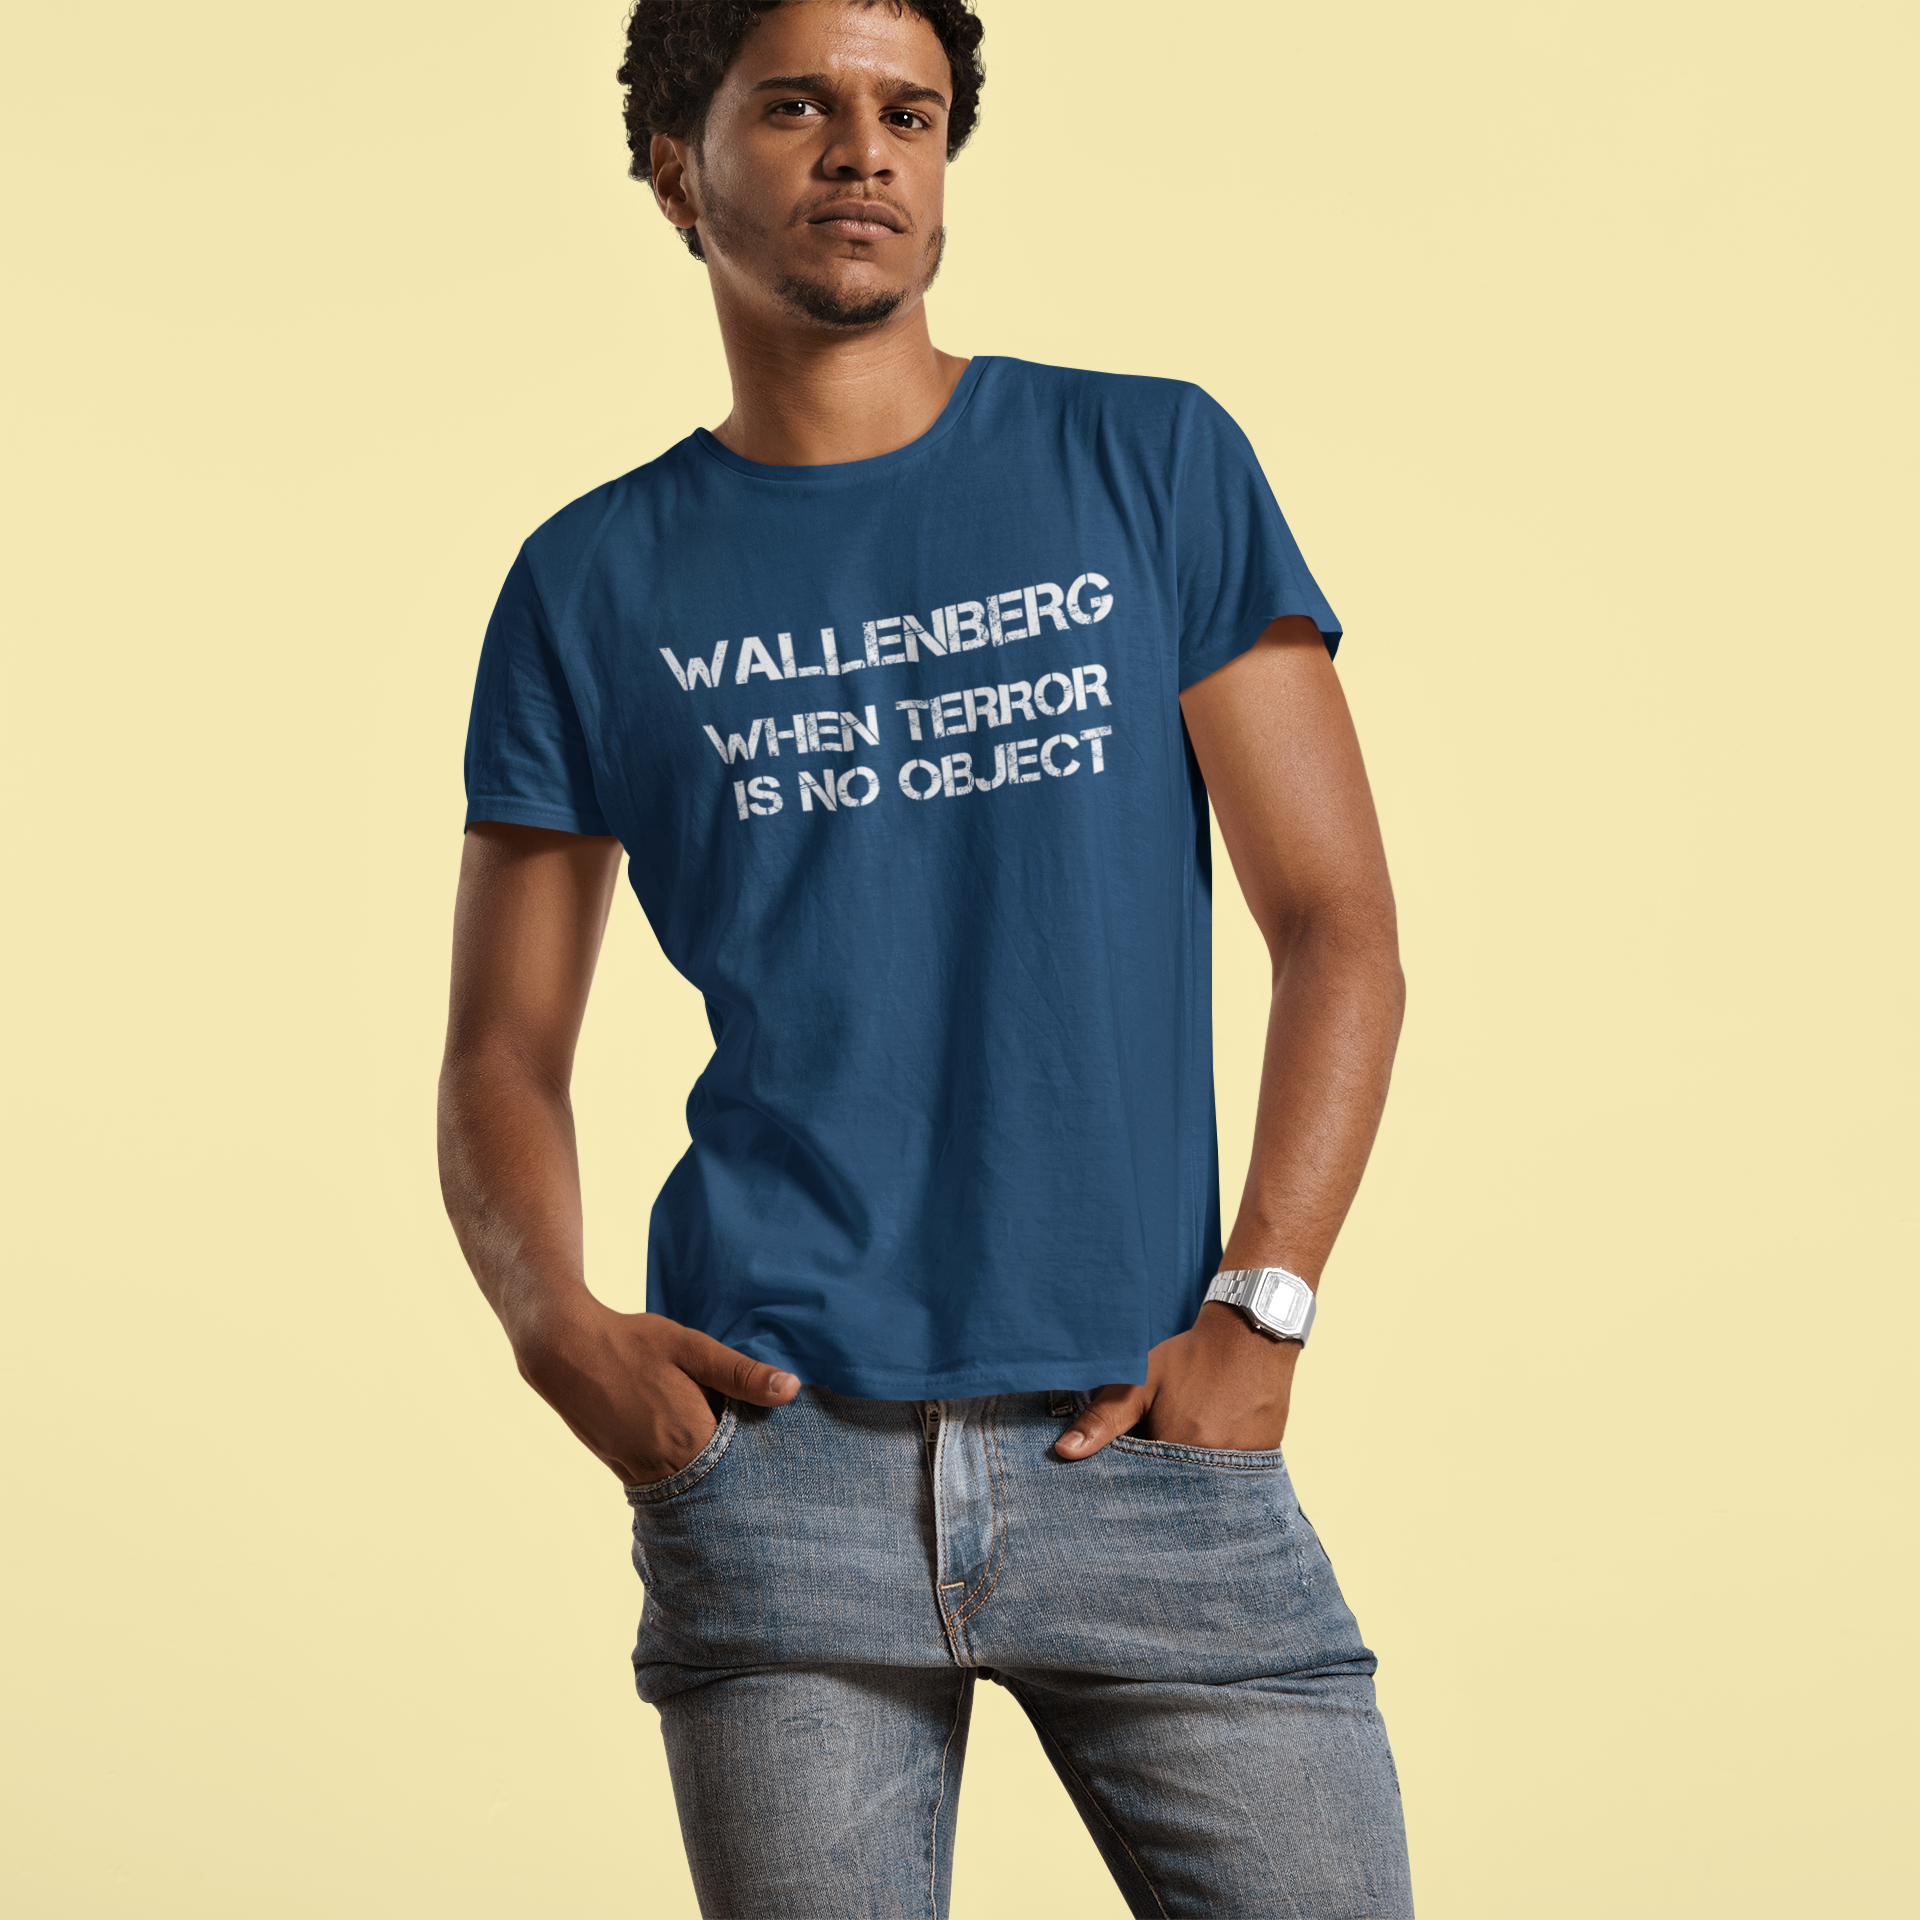 Ericsson & Wallenbergssfären. Wallenberg When Terror Is No Object. Tshirt med tryck från Statements Clothing